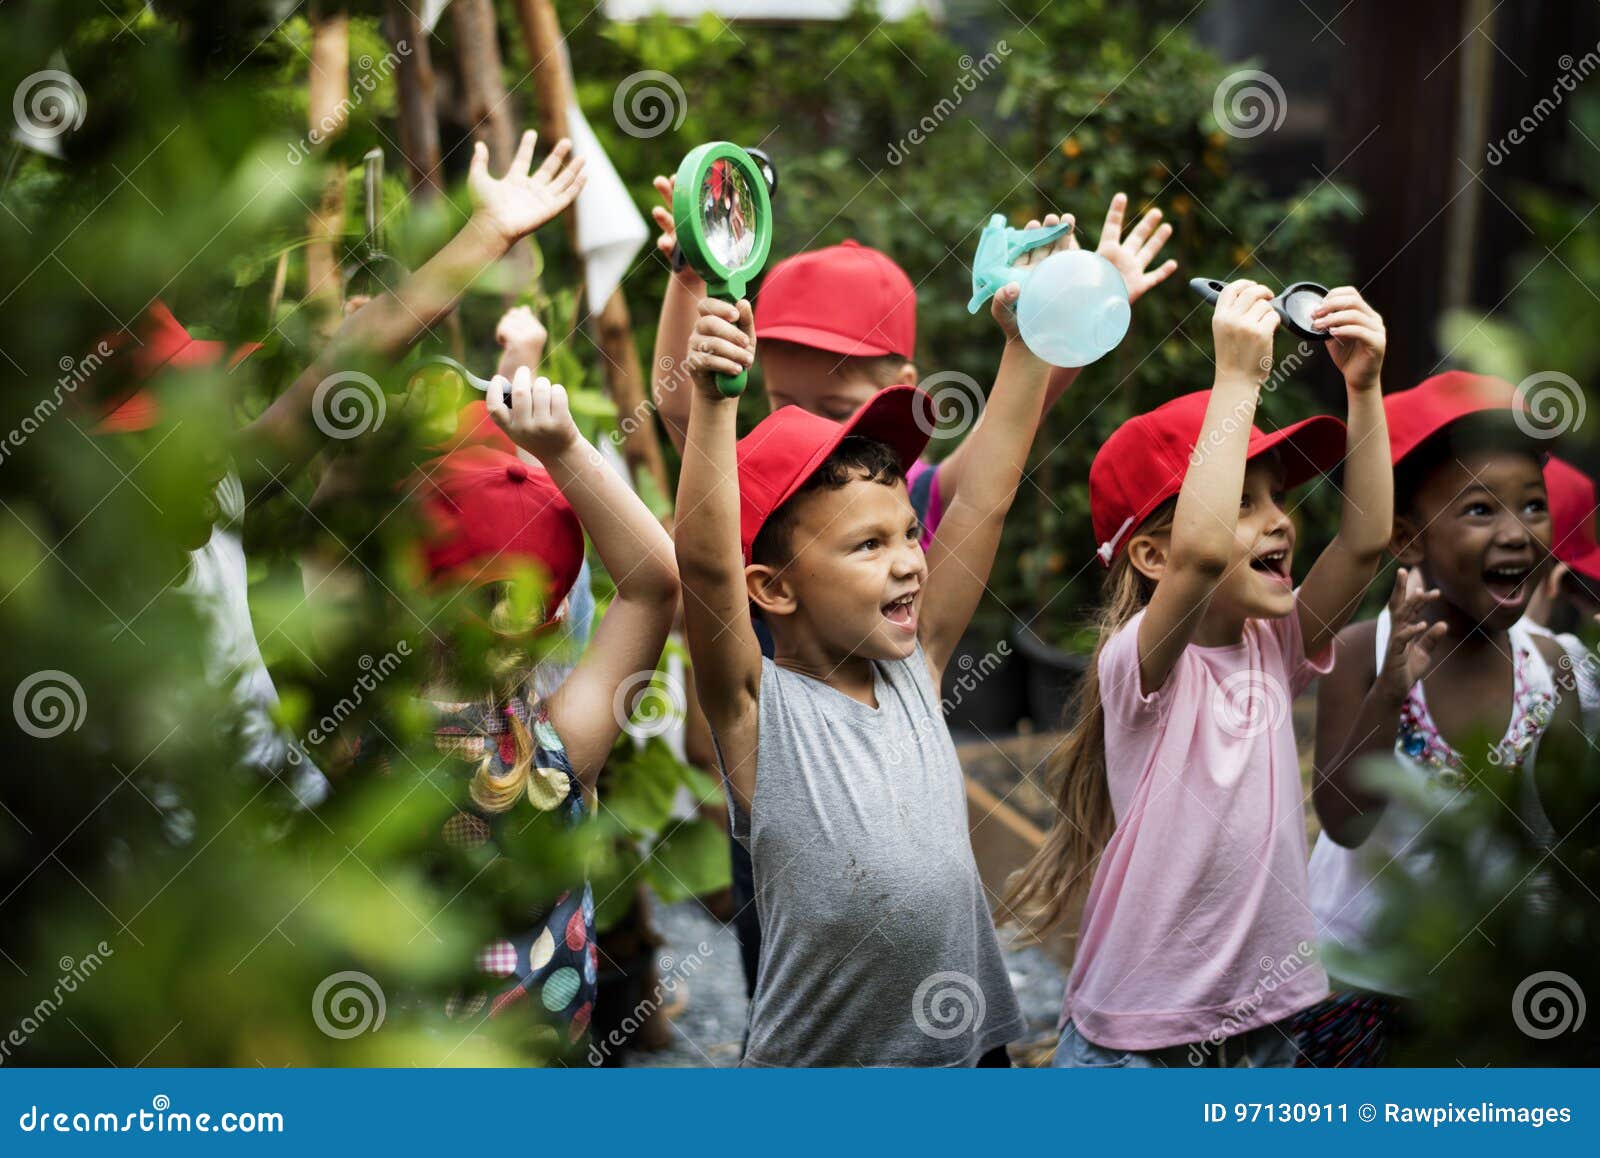 group of kindergarten kids learning gardening outdoors